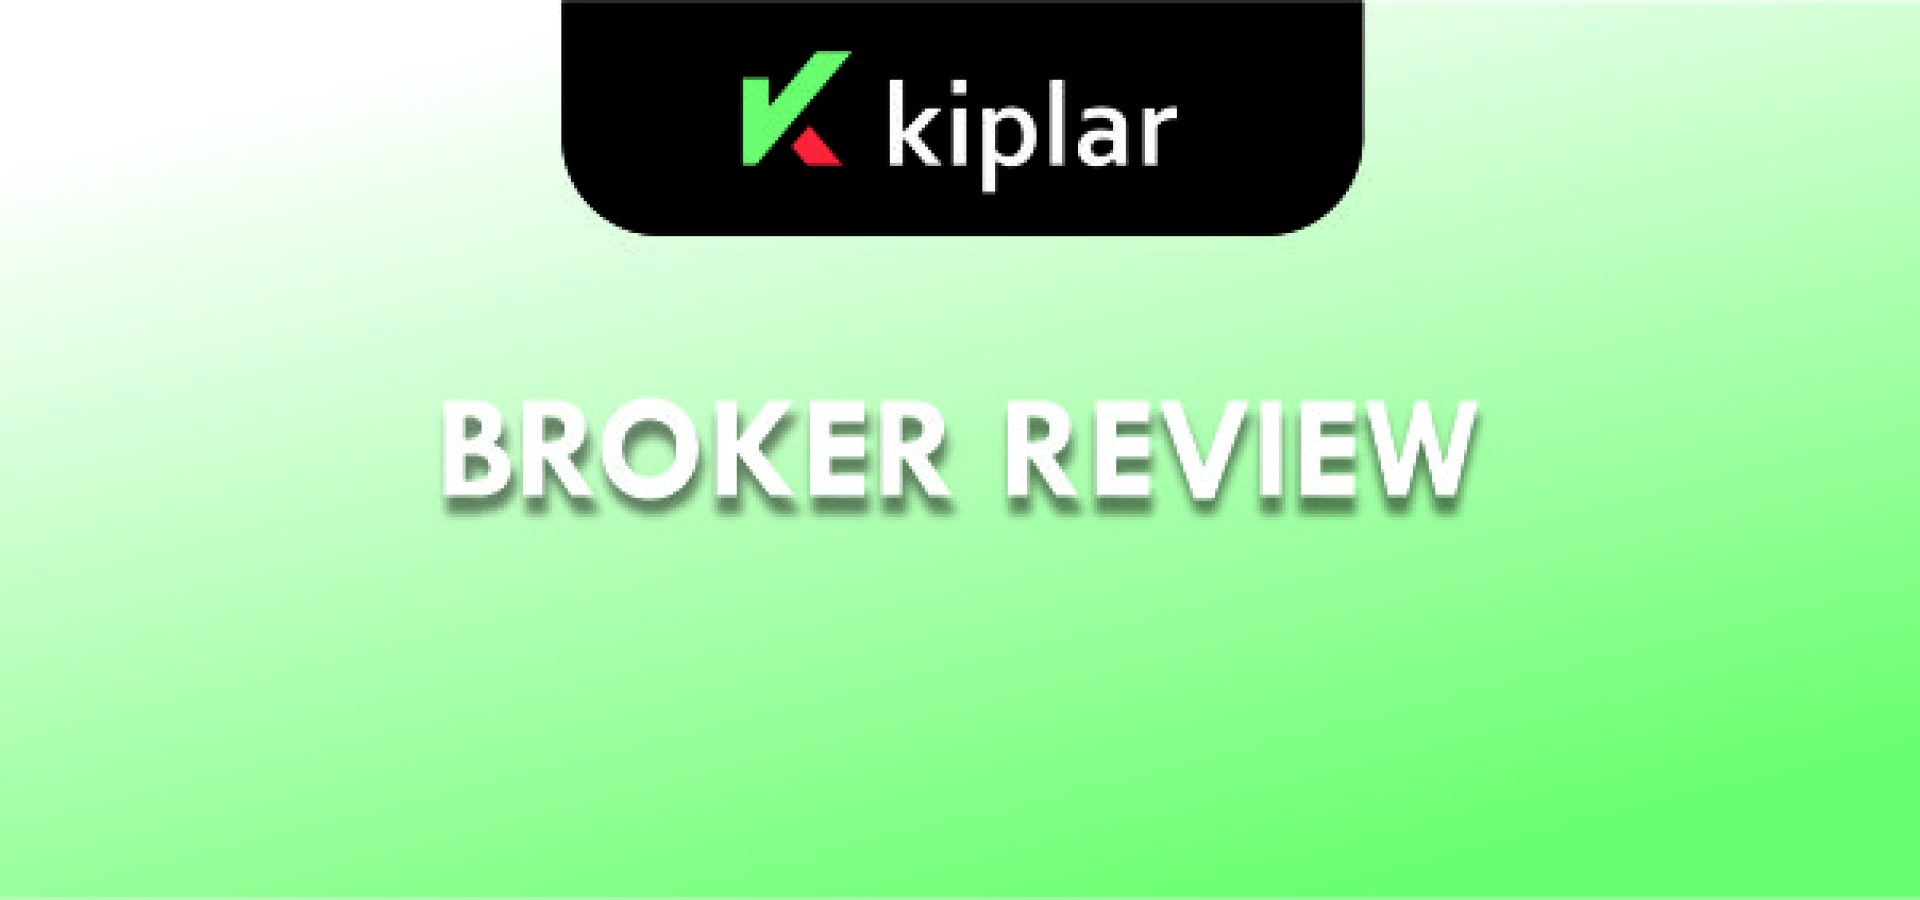 Kiplar Broker Review